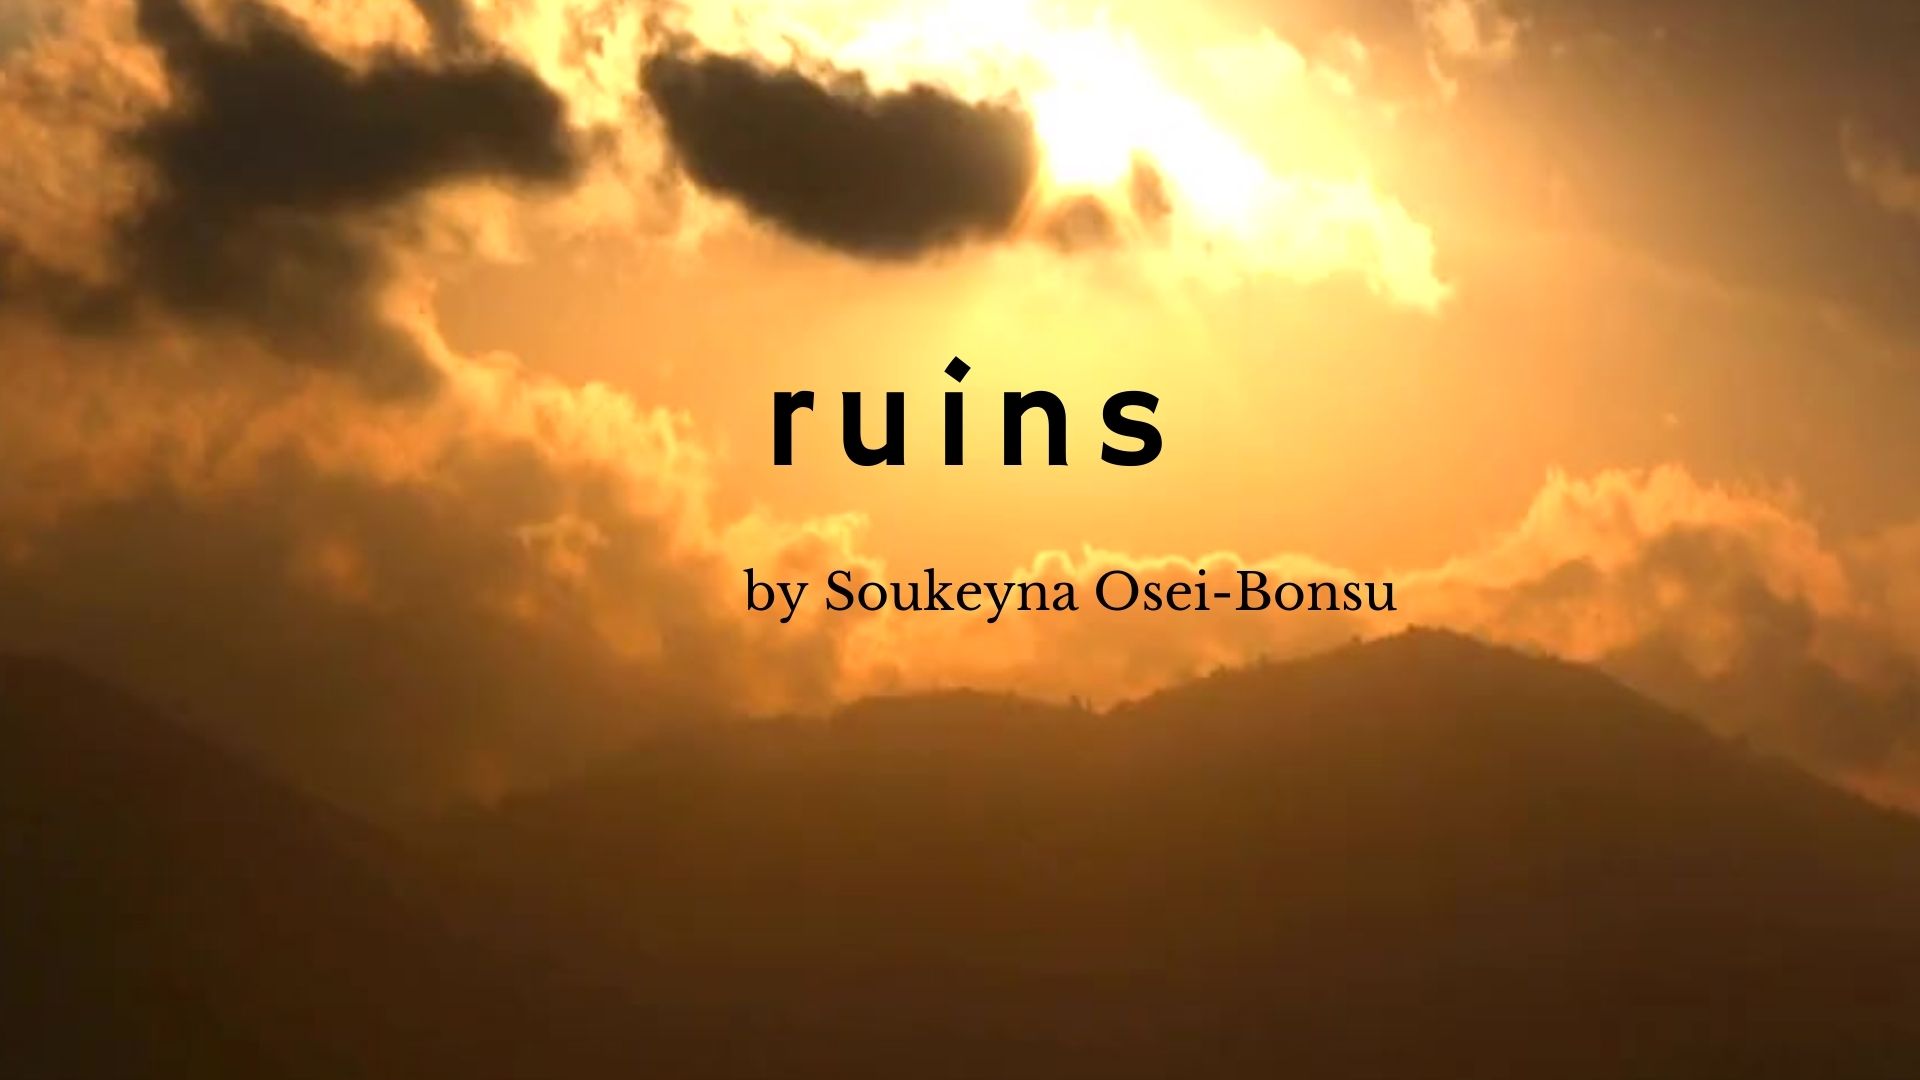 ruins - a poem by Soukeyna Osei-Bonsu